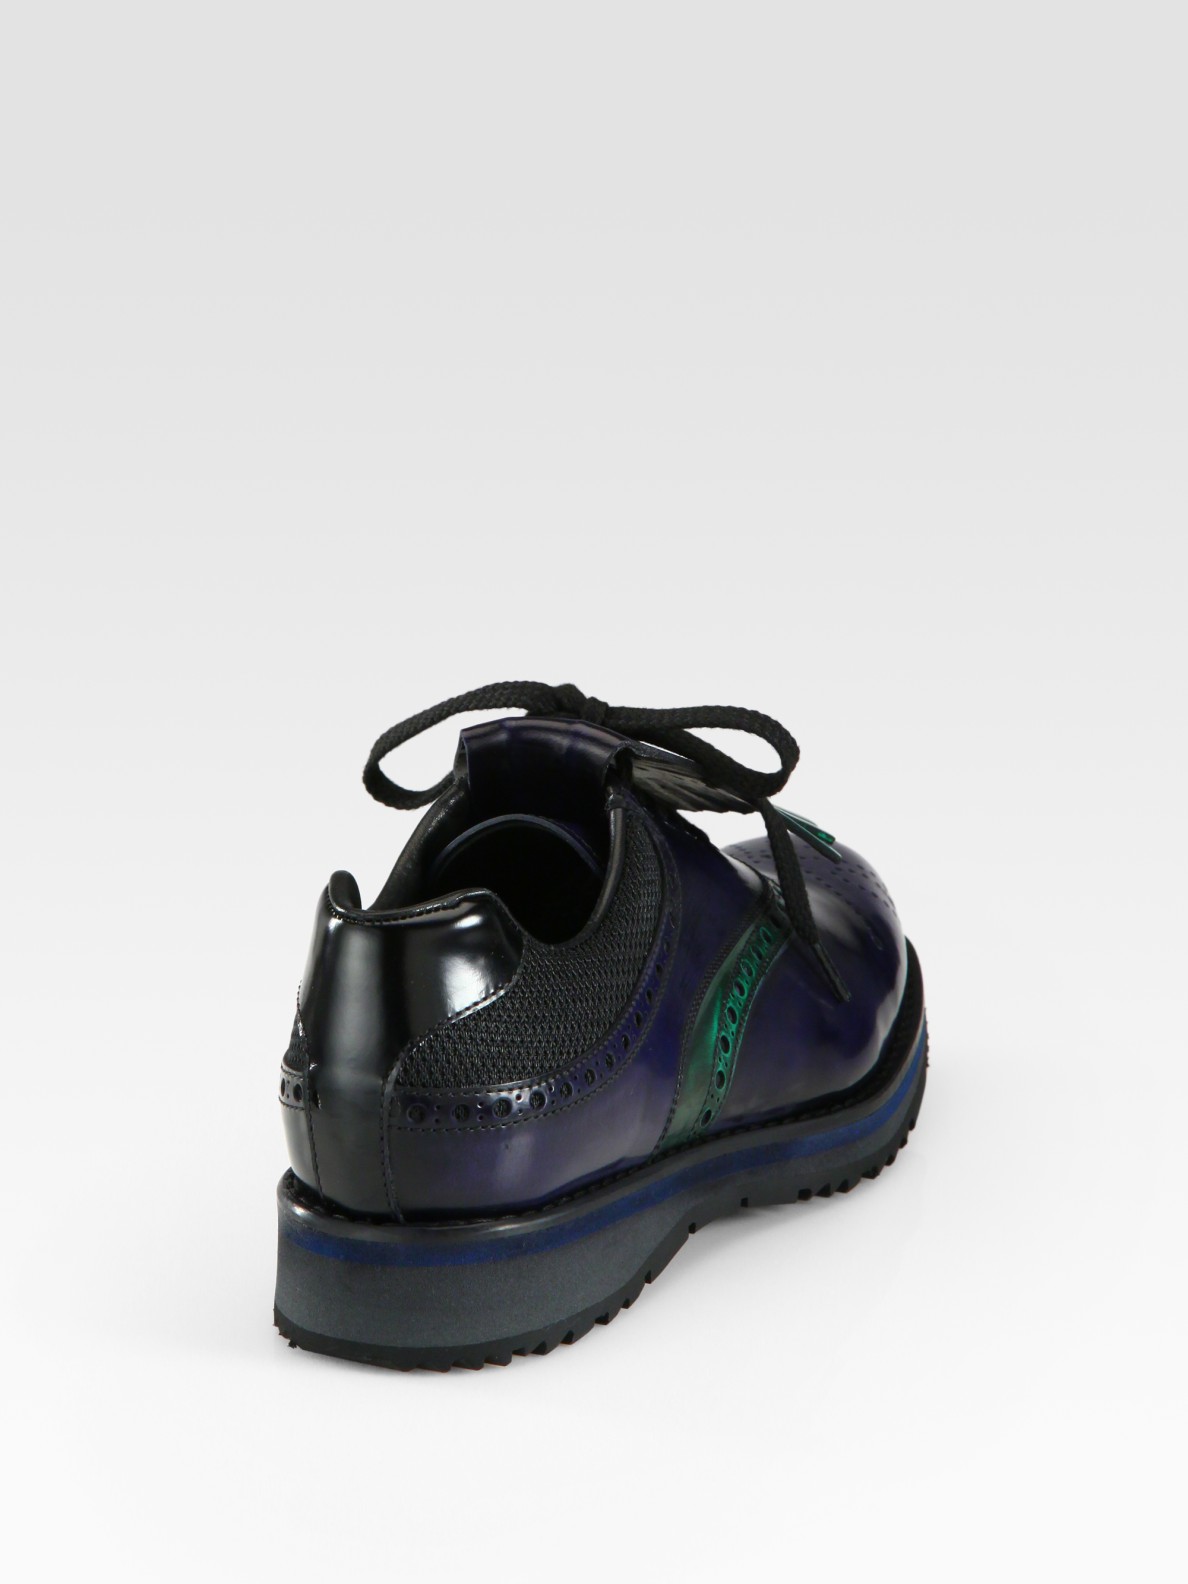 Prada Leather Wingtip Golf Shoes in Blue (Black) - Lyst